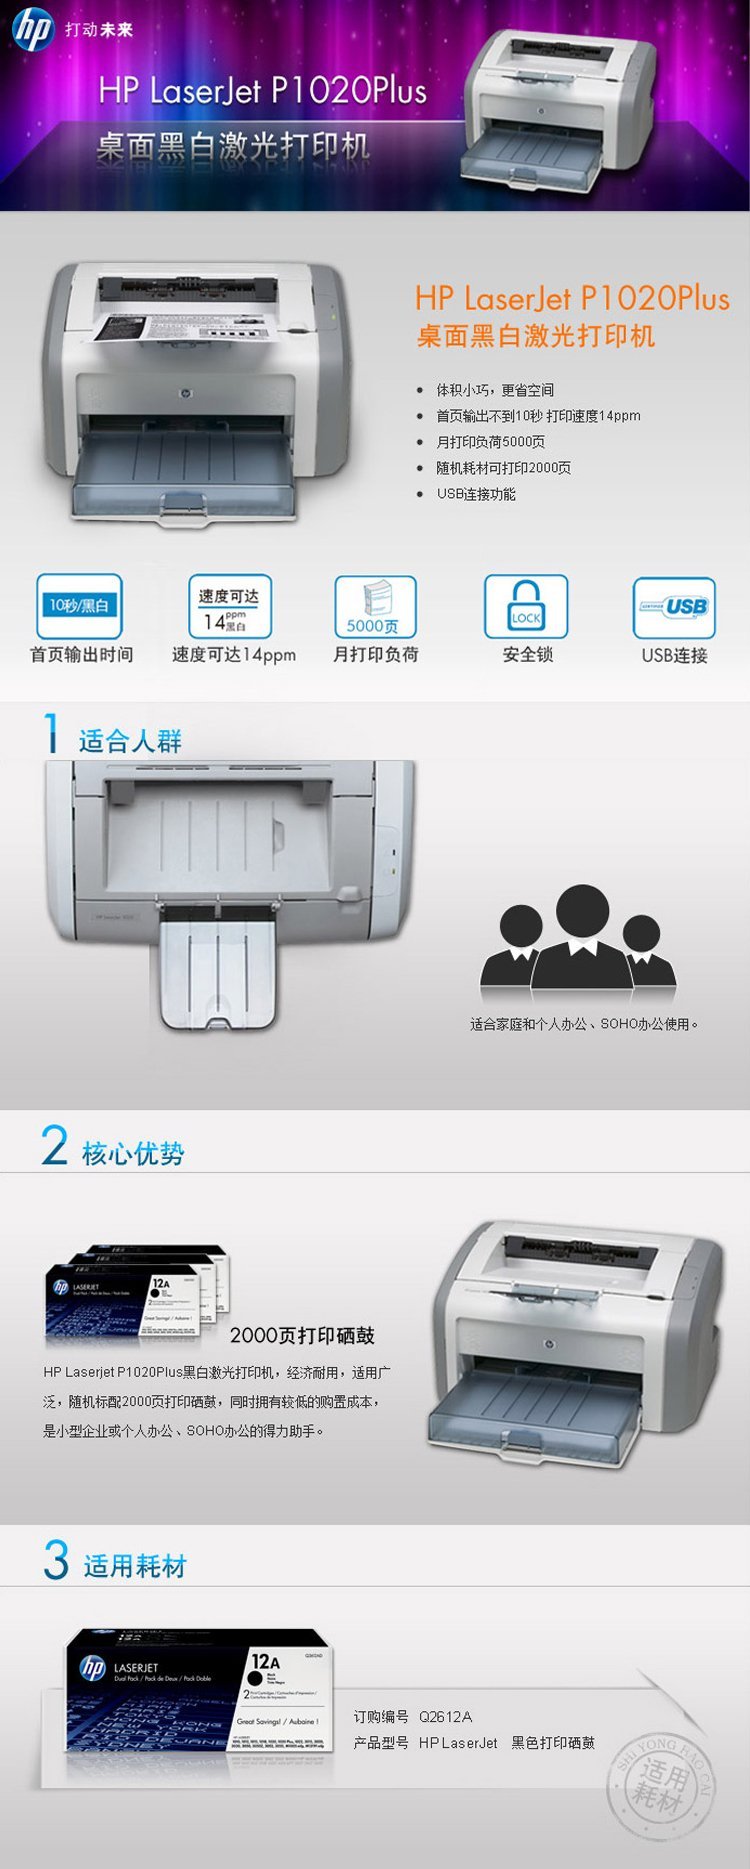 HP-LaserJet-1020-Plus-Printer.jpg